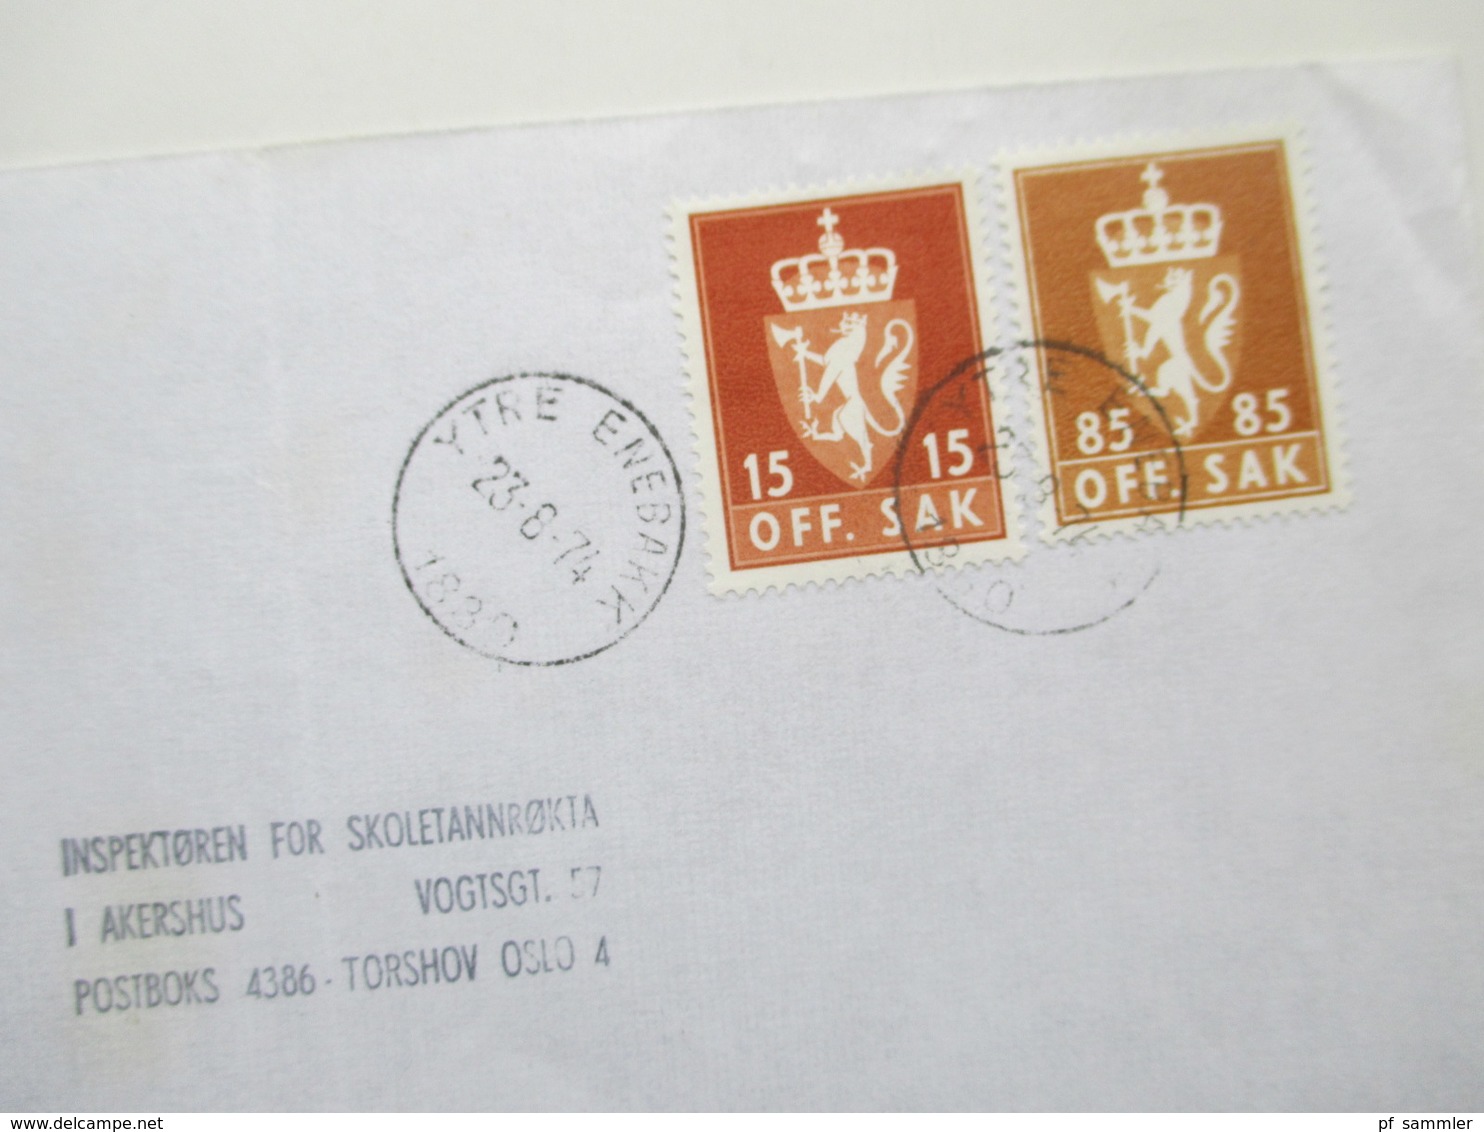 Norwegen 1972 Dienstmarken 5 Belege Inspektoren For Skoletannrokta Akershus. Off. Sak - Service